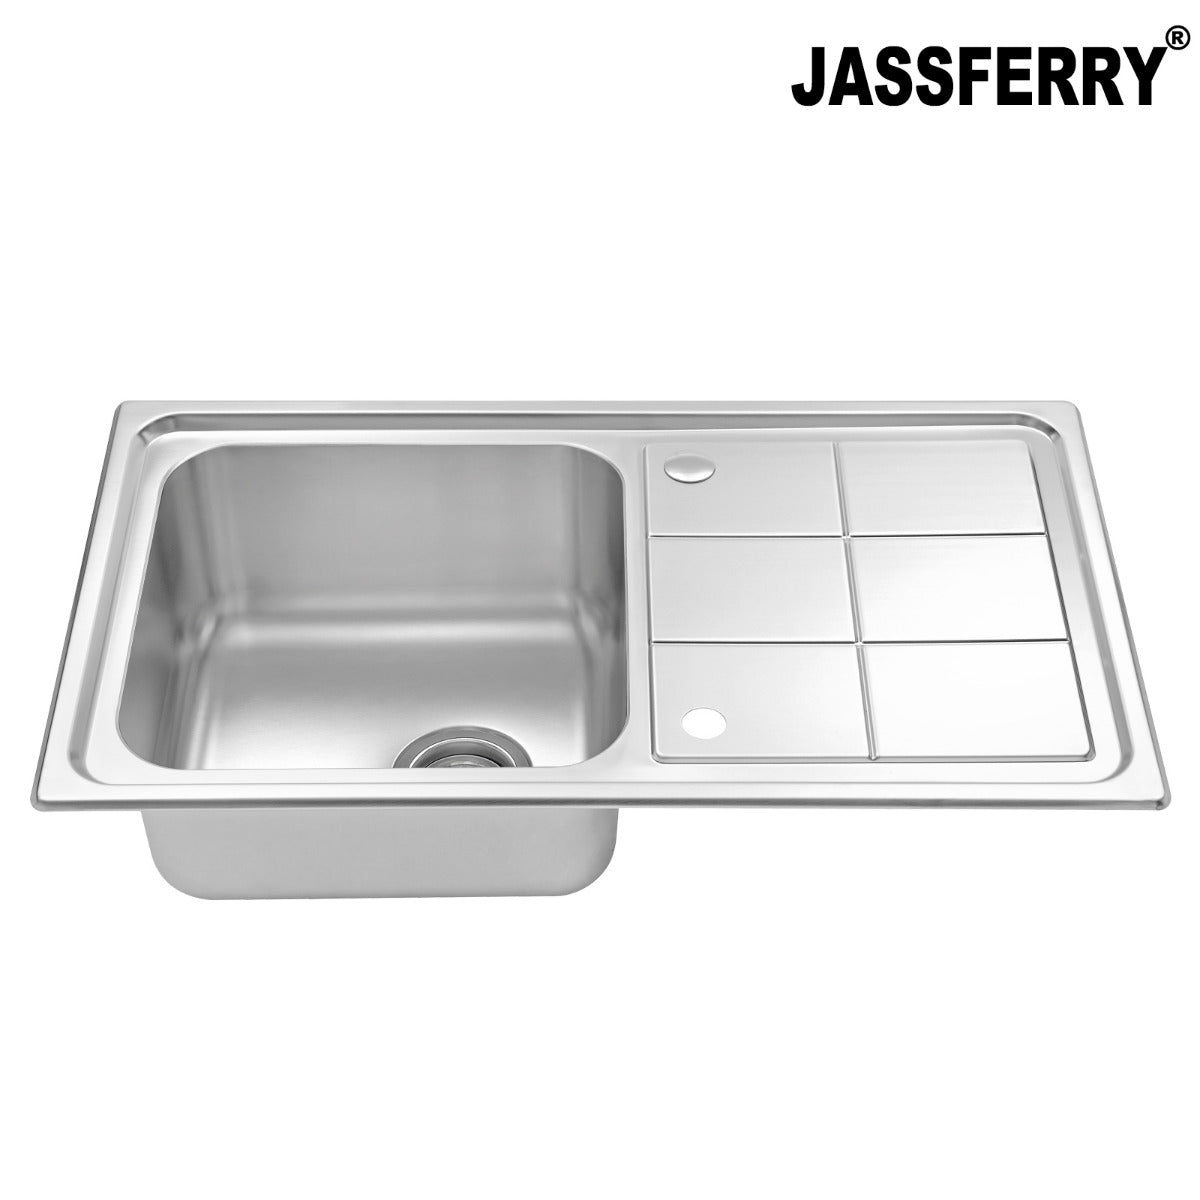 JassferryJASSFERRY Stainless Steel Kitchen Sink Single 1 Bowl Reversible Rectangle DrainerKitchen Sinks